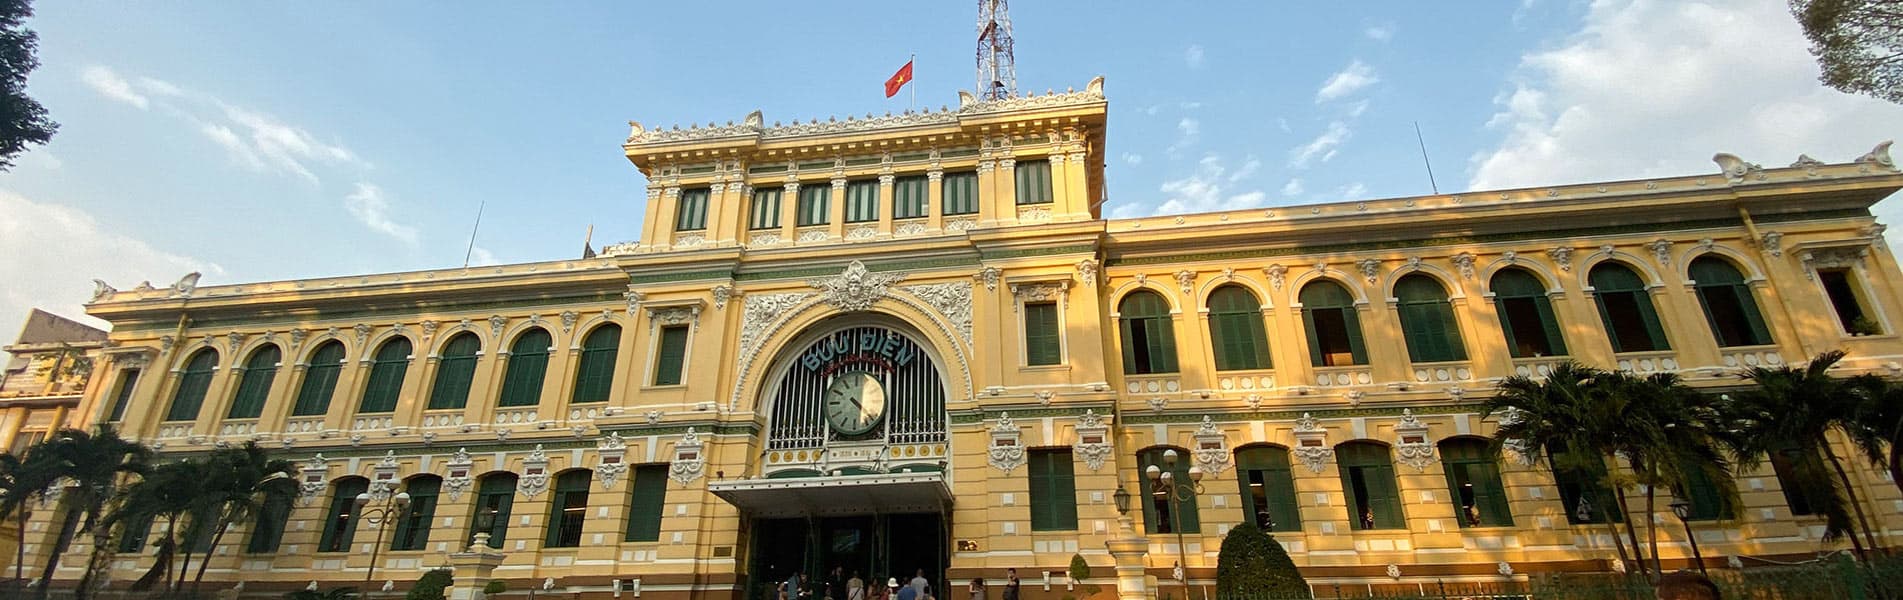 Central Post Office, Ho Chi Minh City